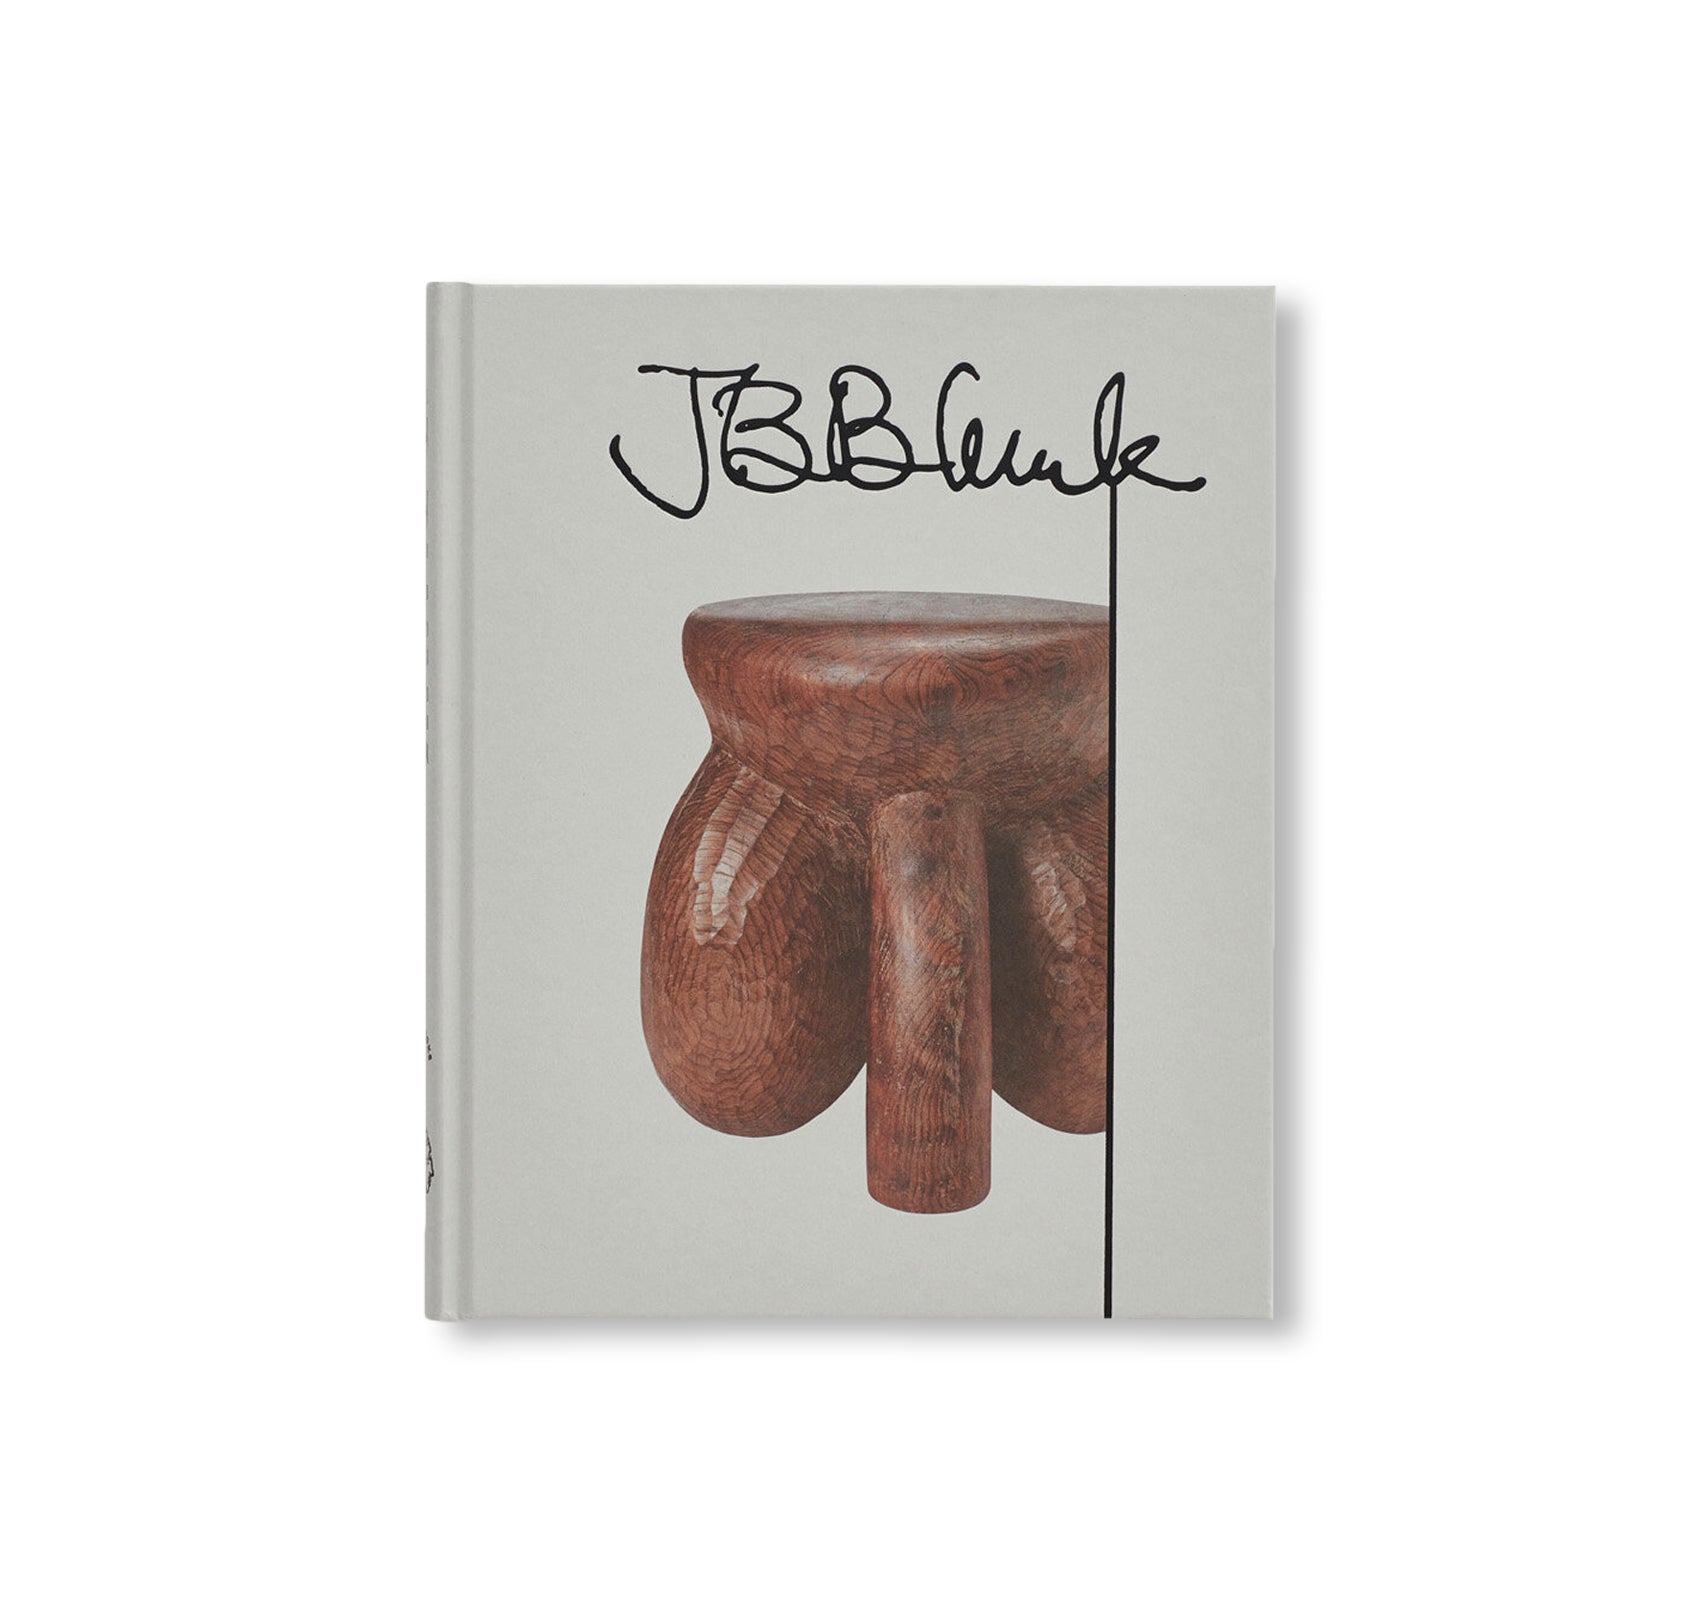 JB BLUNK by J.B. Blunk [THIRD EDITION]